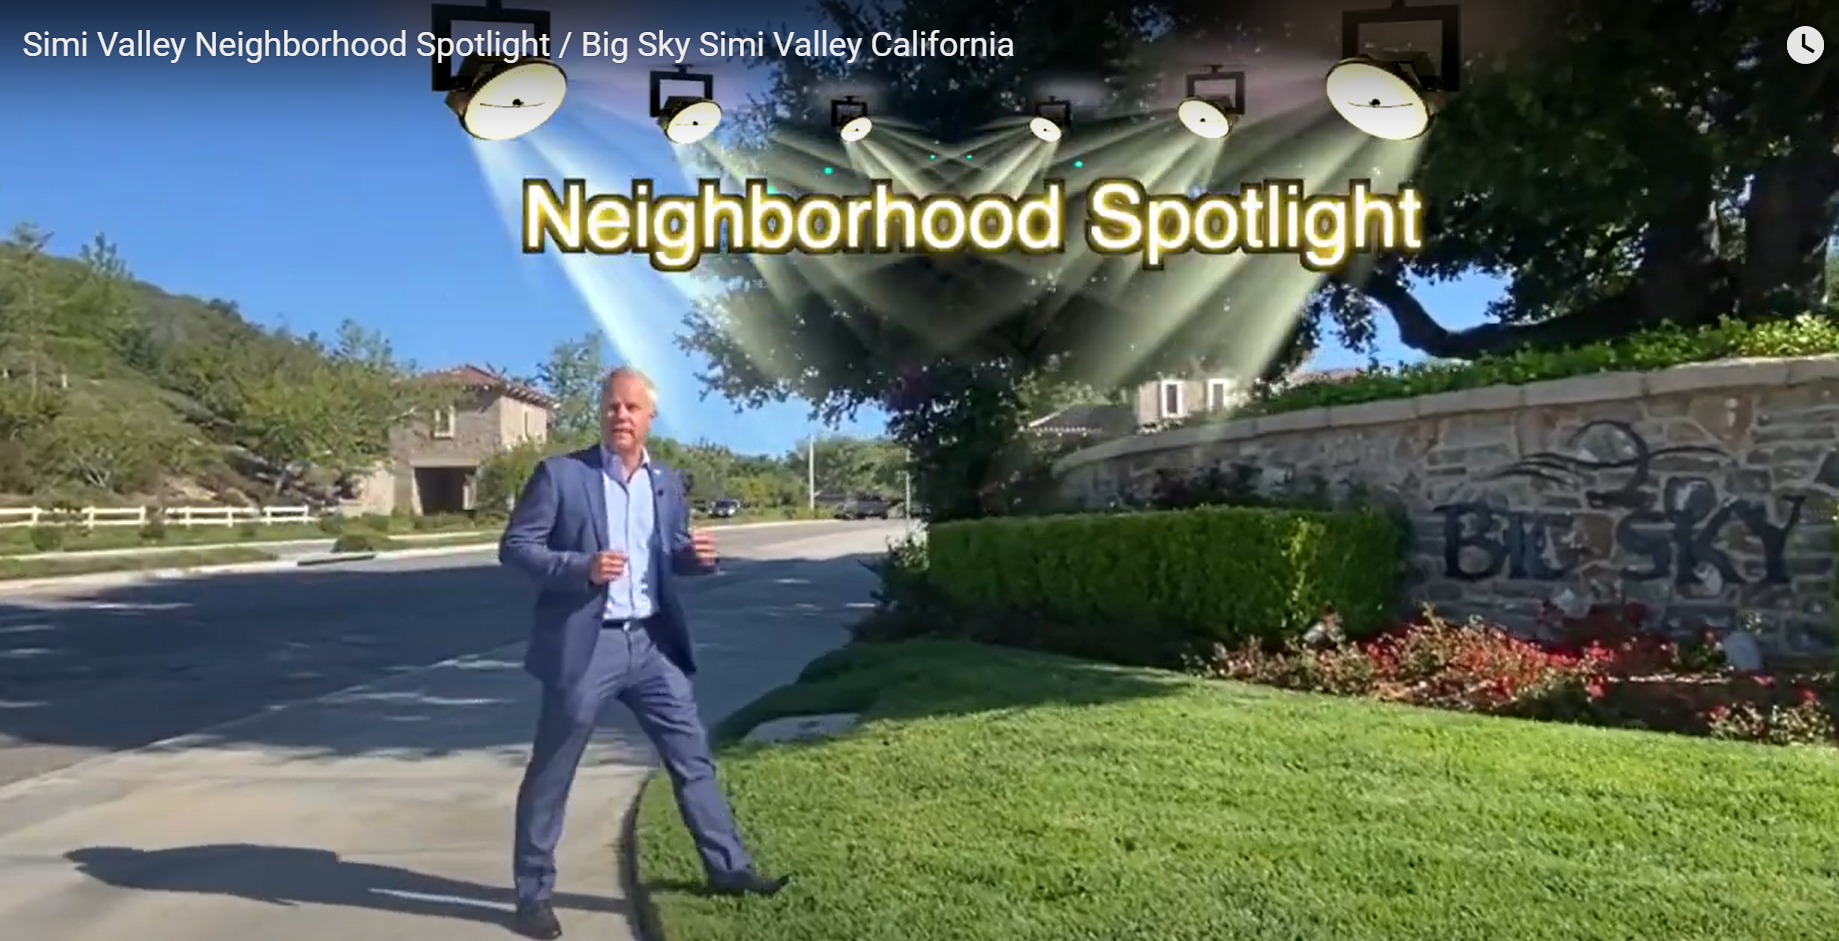 Simi Valley Neighborhood Spotlight / Big Sky Simi Valley California